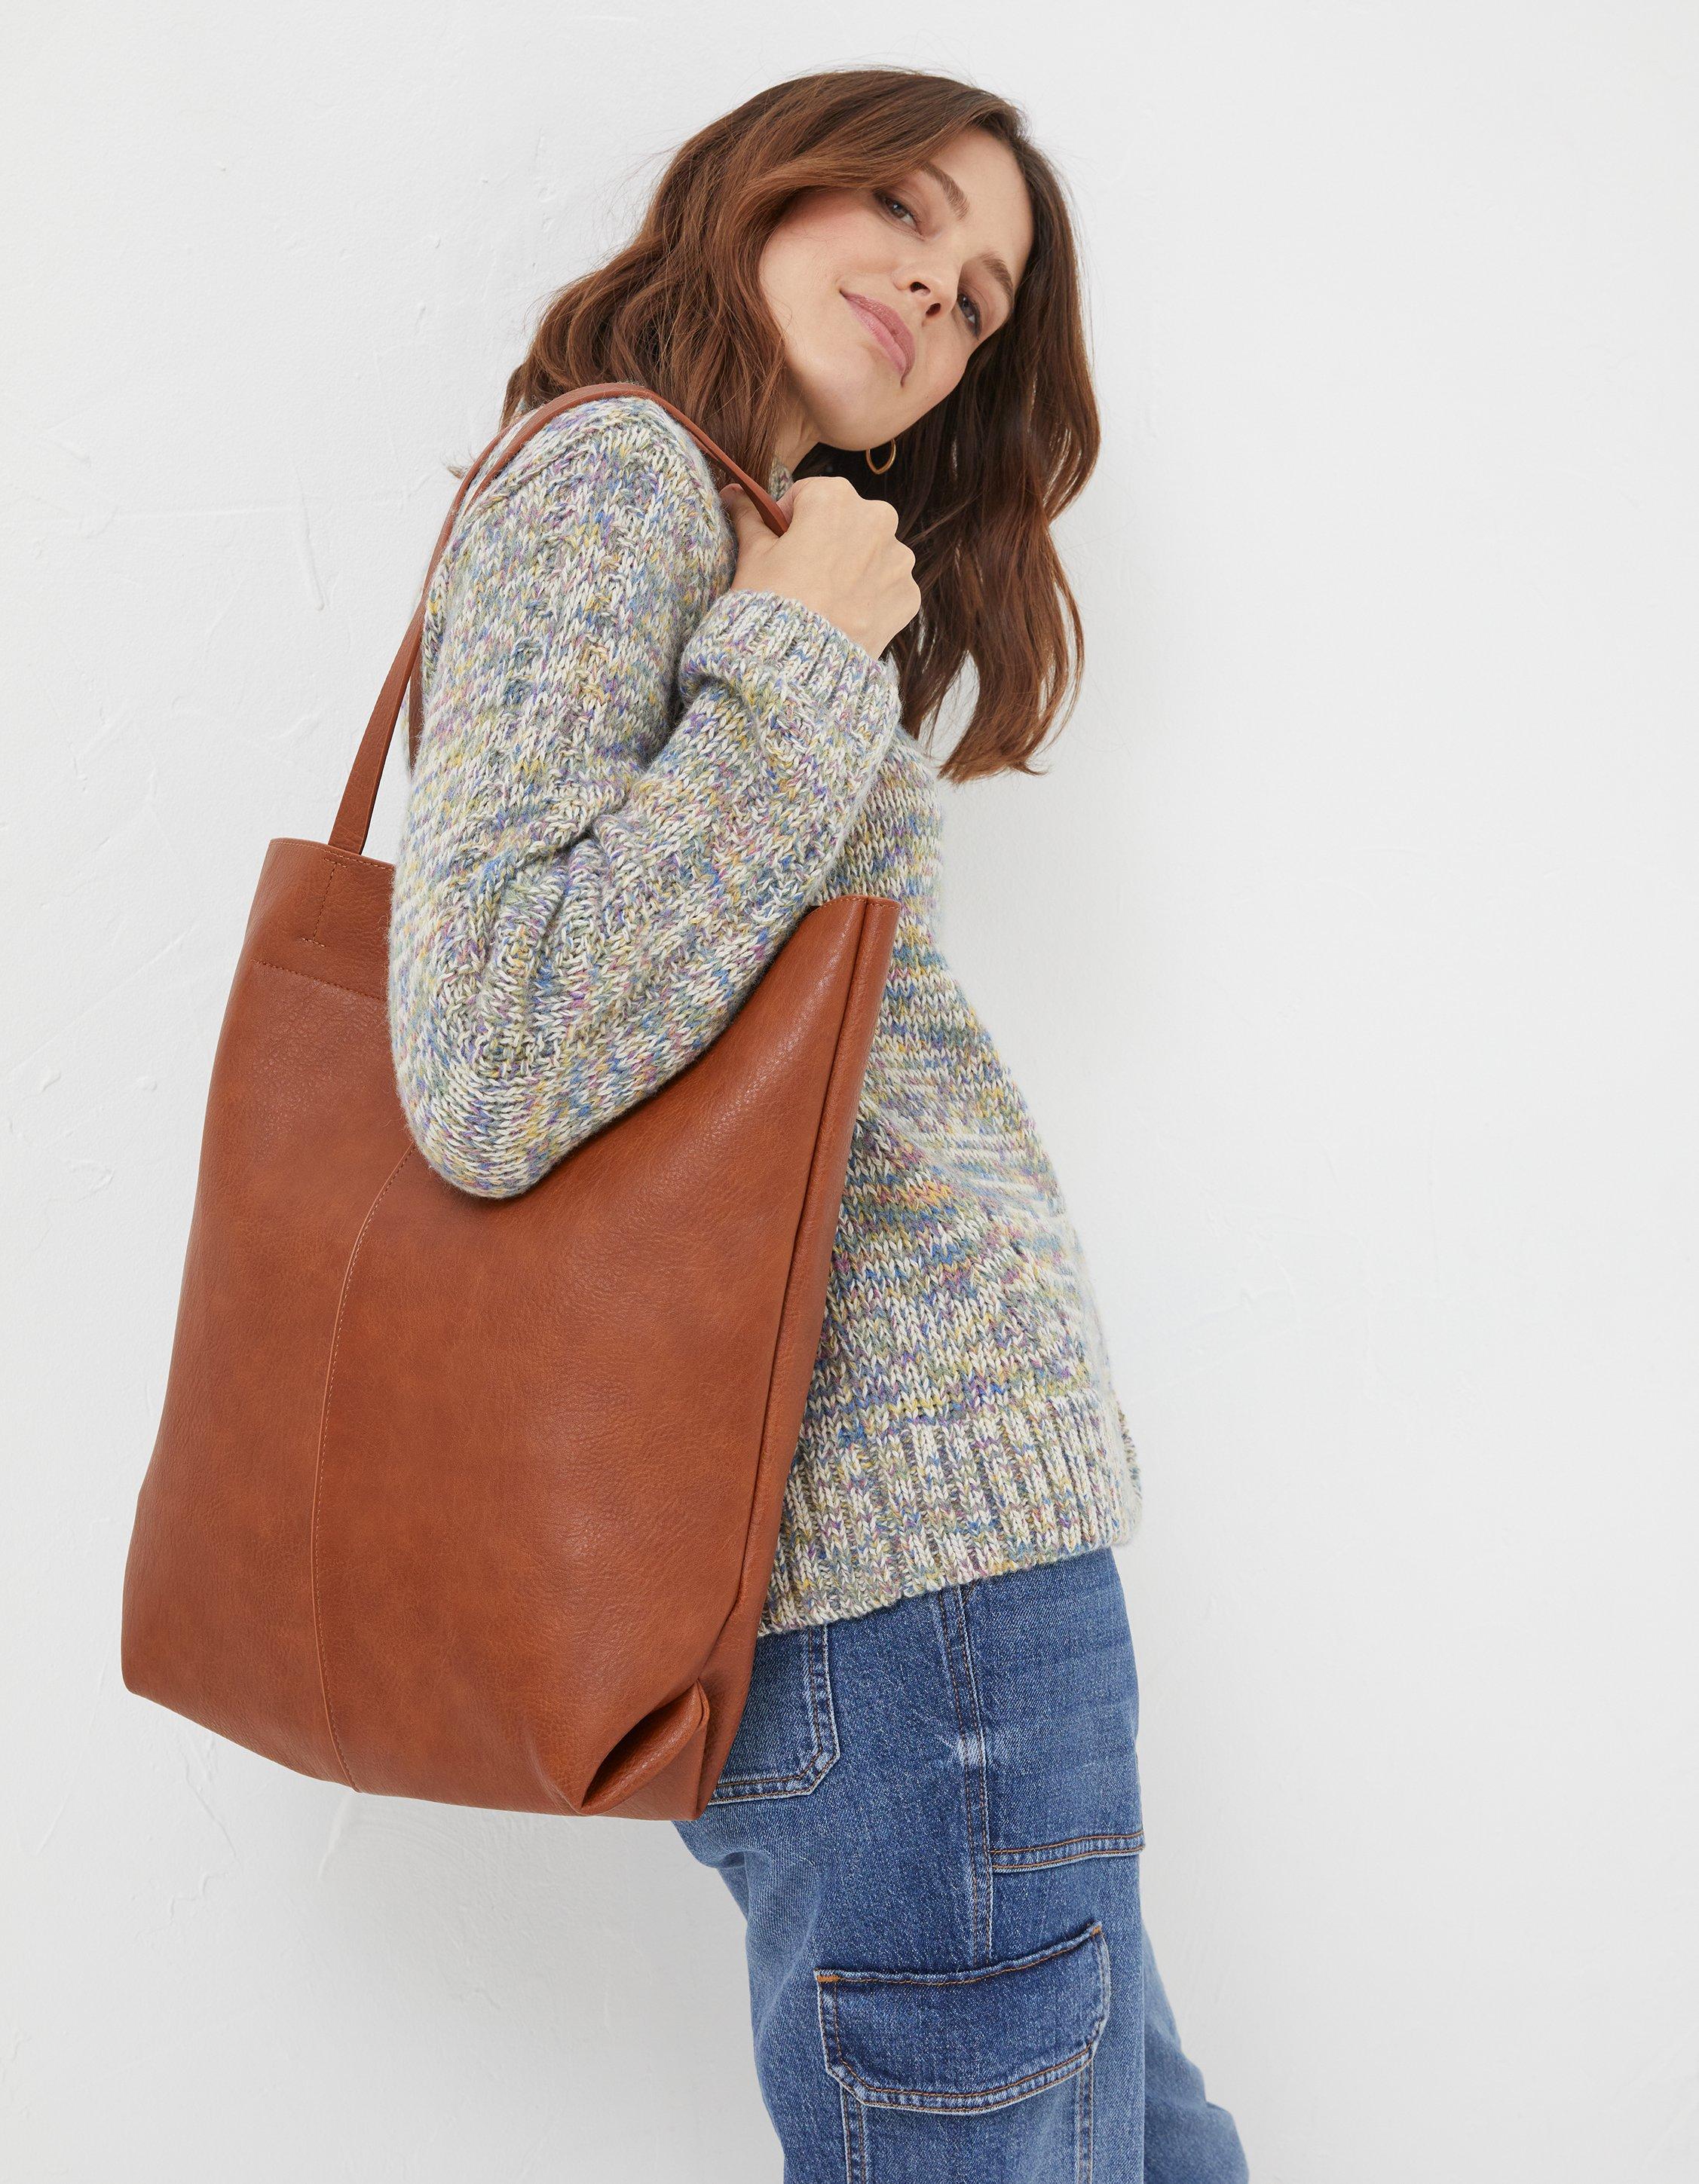 Womens Beig/khaki Handbags & Purses - Accessories